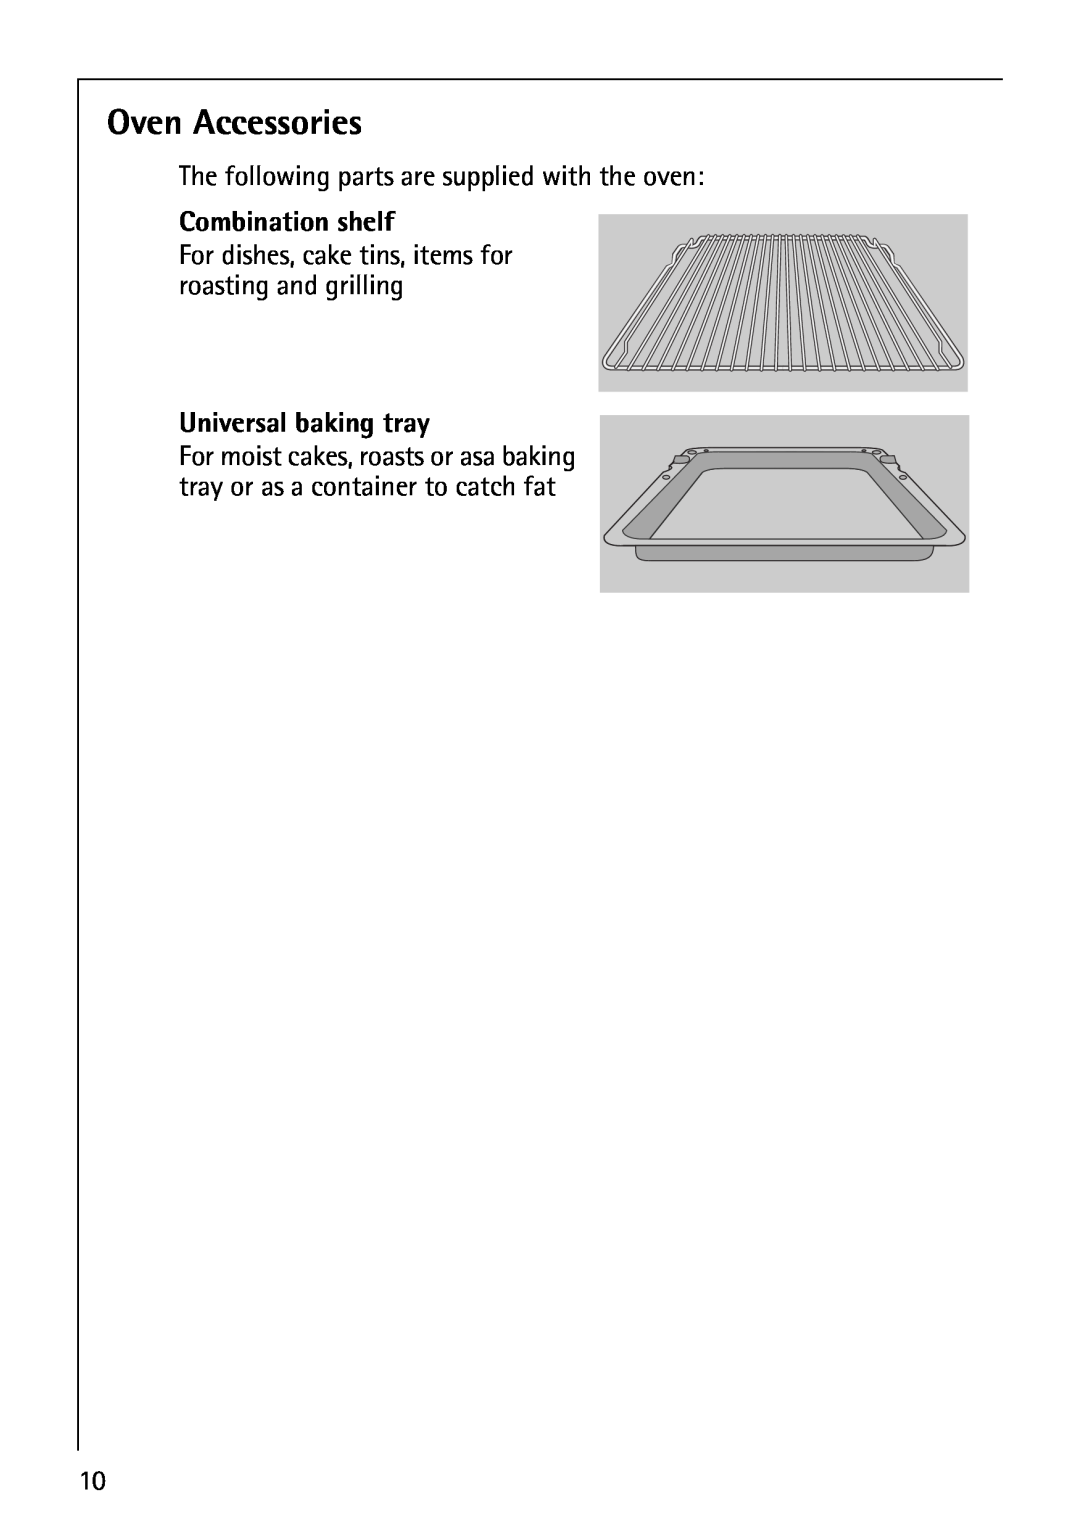 AEG E3000-1 manual Oven Accessories, Combination shelf, Universal baking tray 